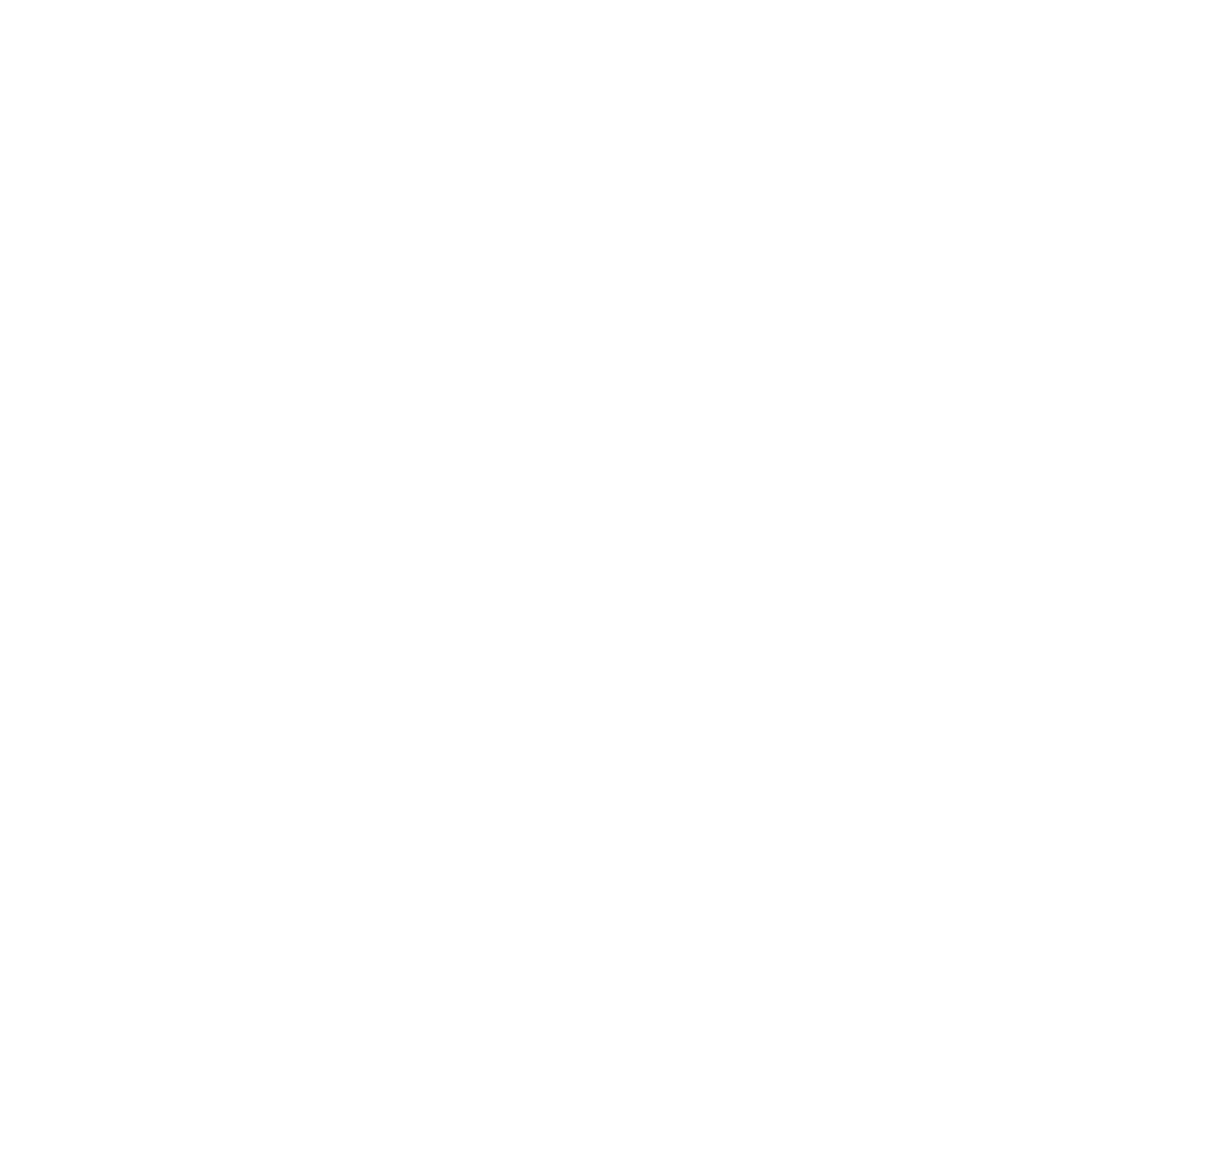 Bike Experience